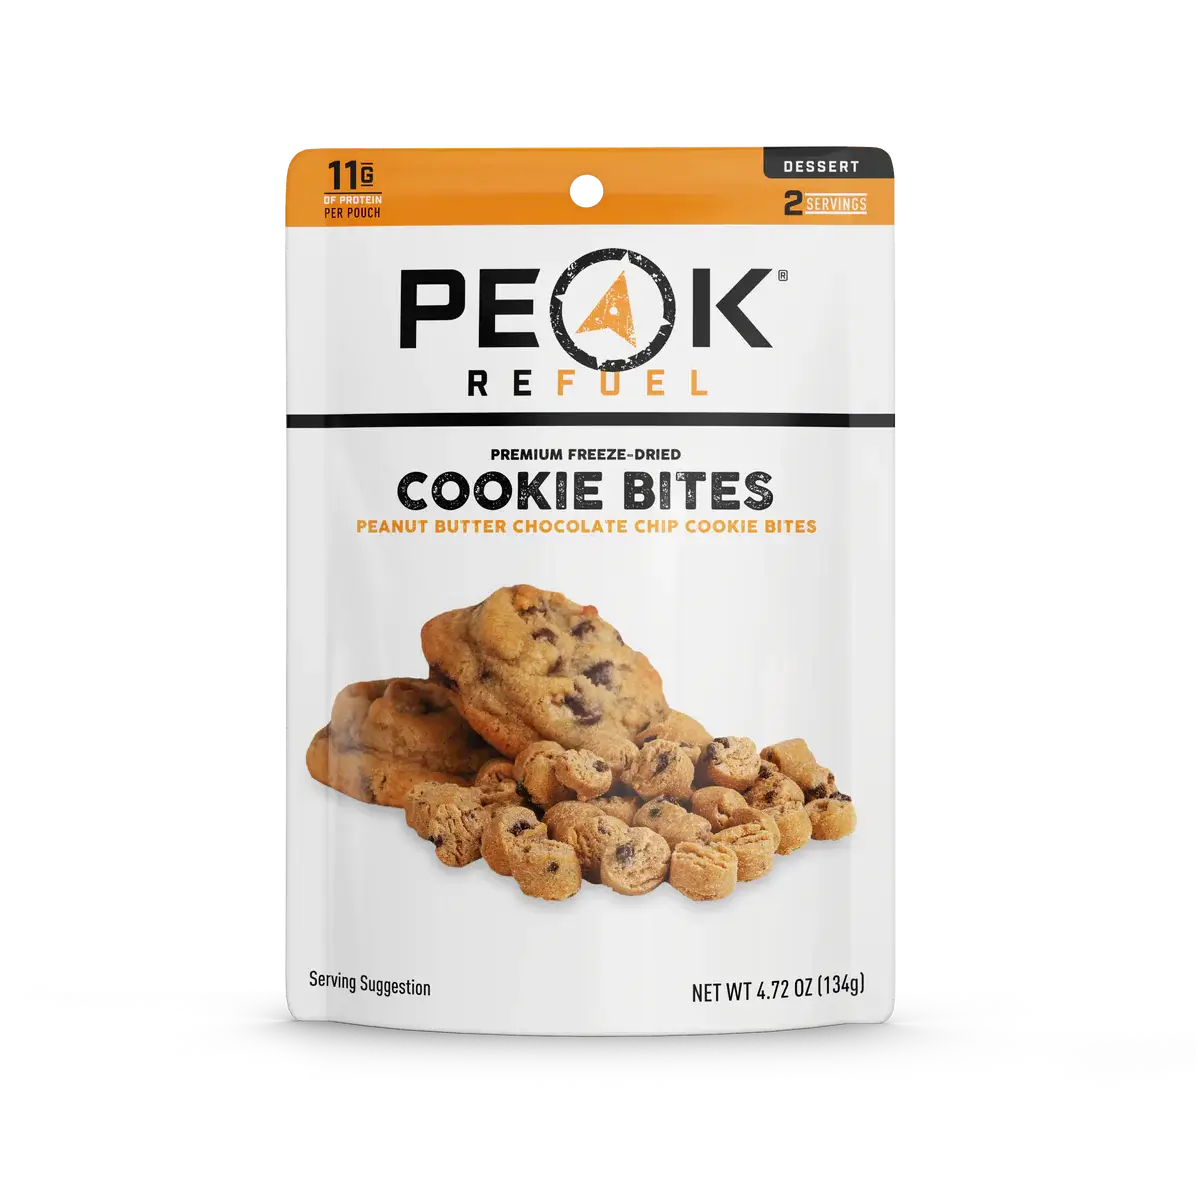 Peak_Refuel-Peanut_Butter_Chocolate_Chip_Cookie_Bites